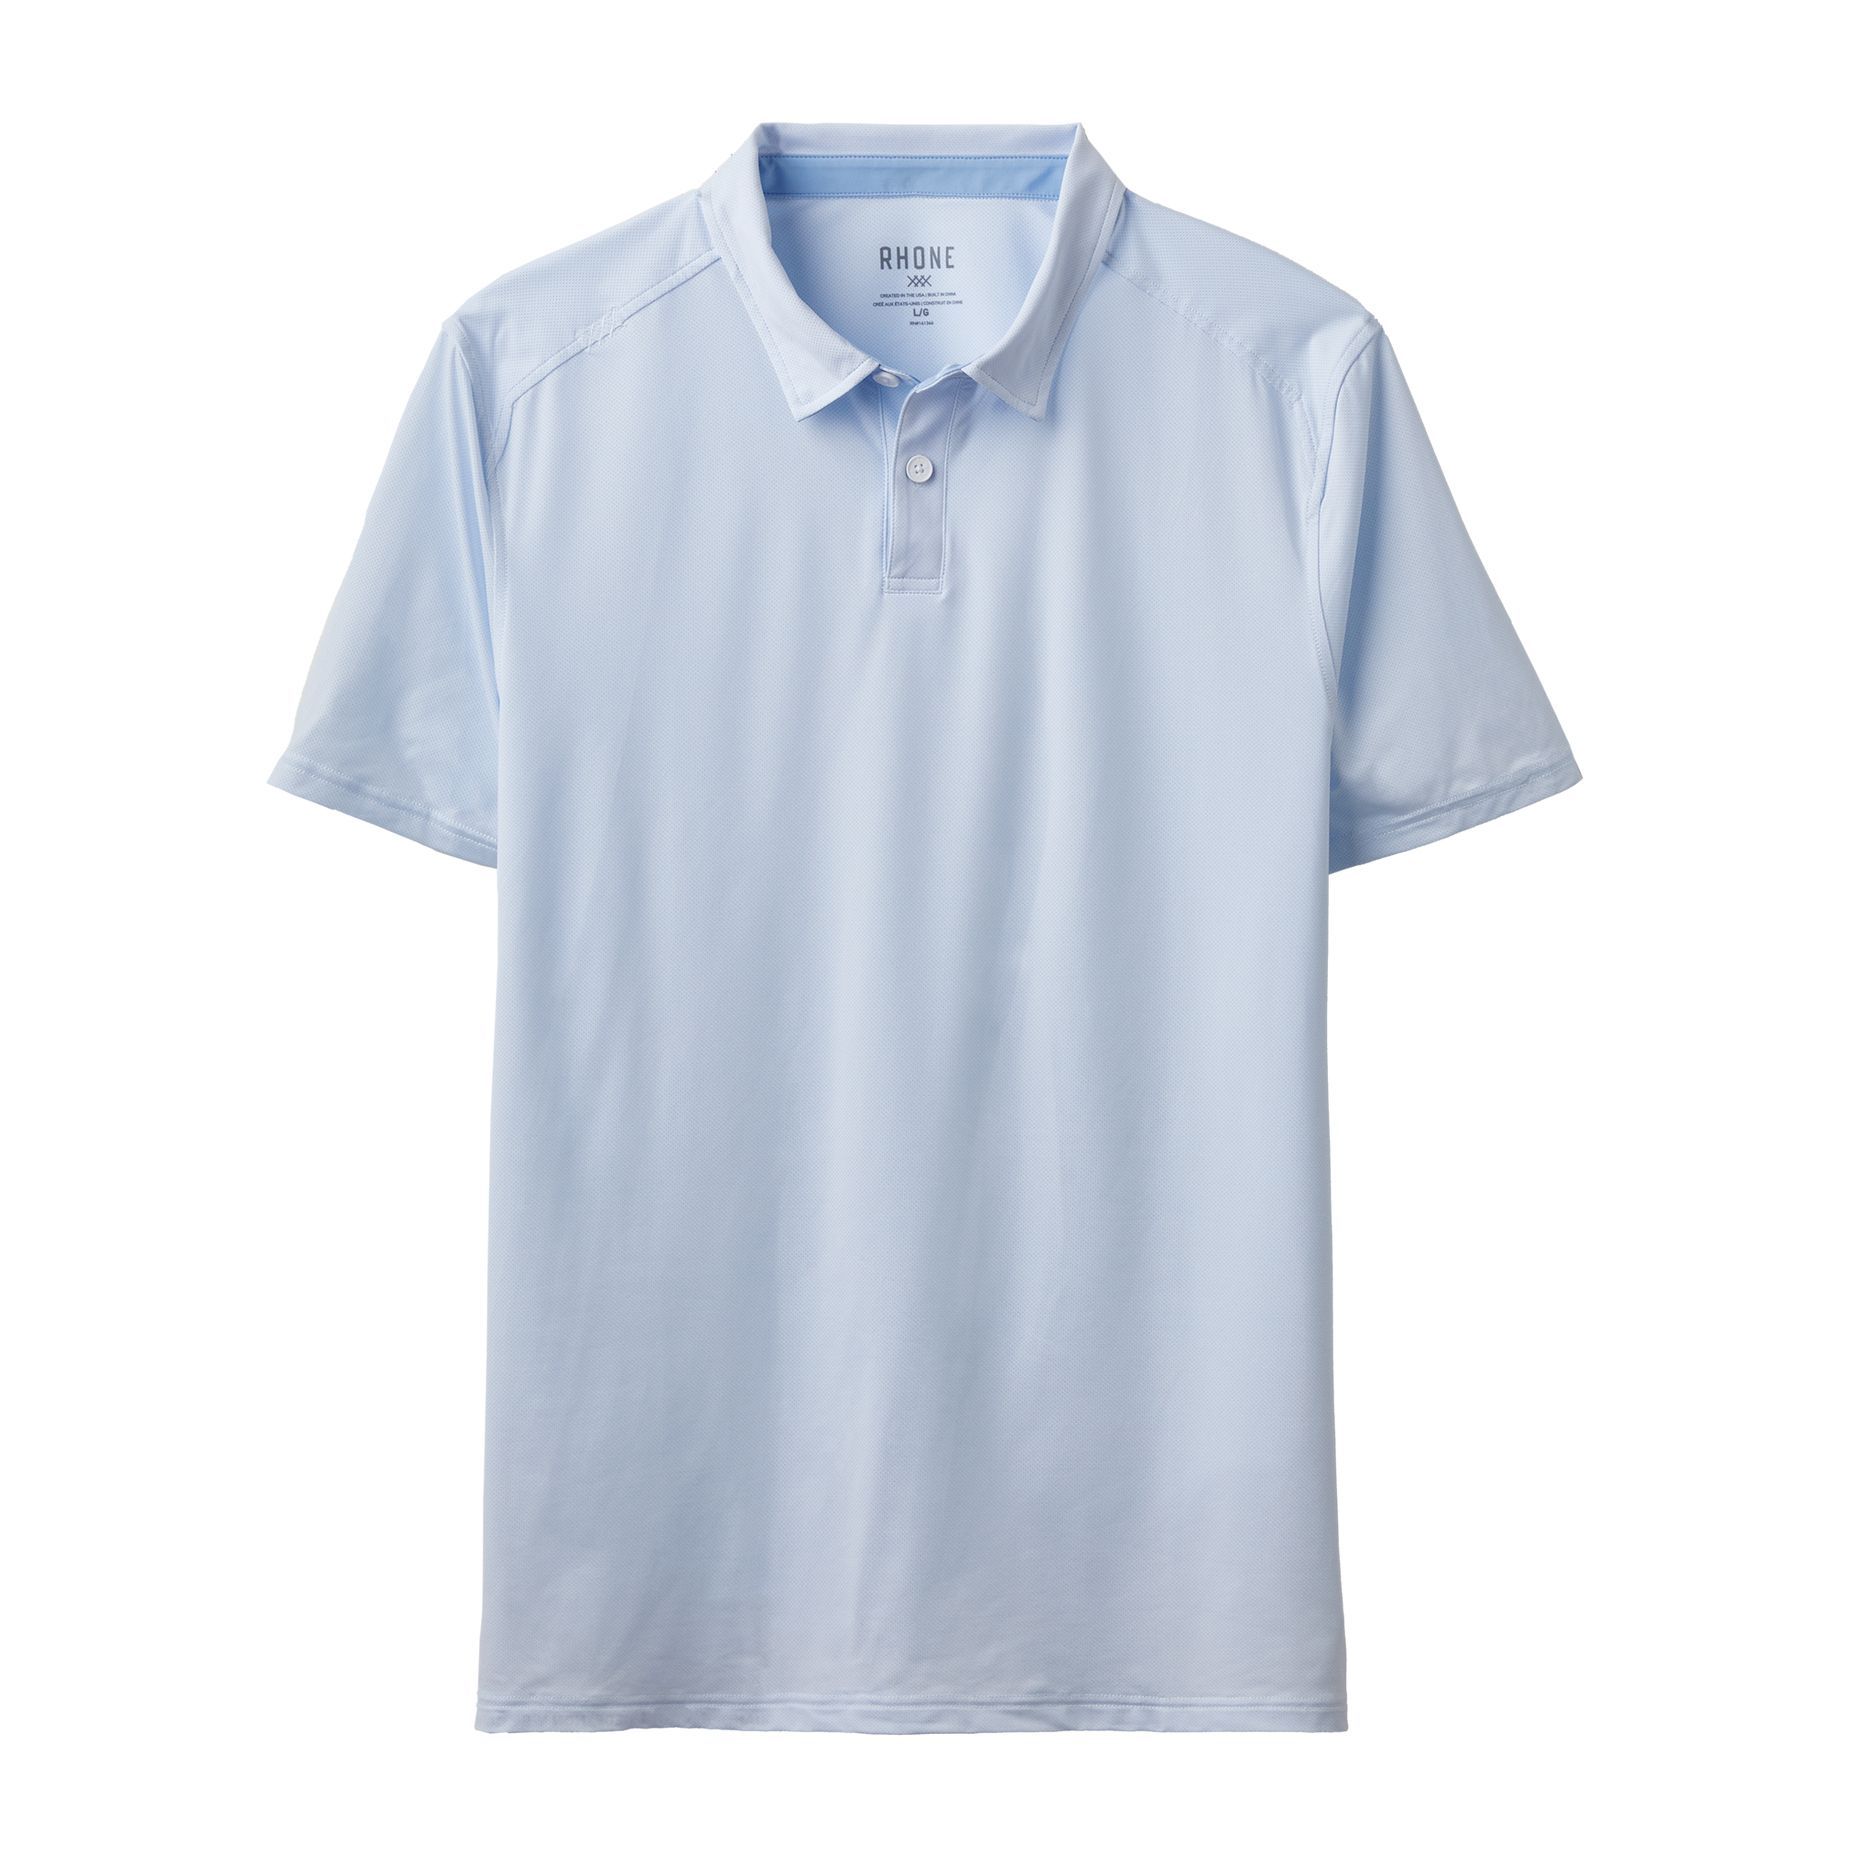 Mens Piquet Polo Shirt Premium Casual Short Sleeve Regular Fit